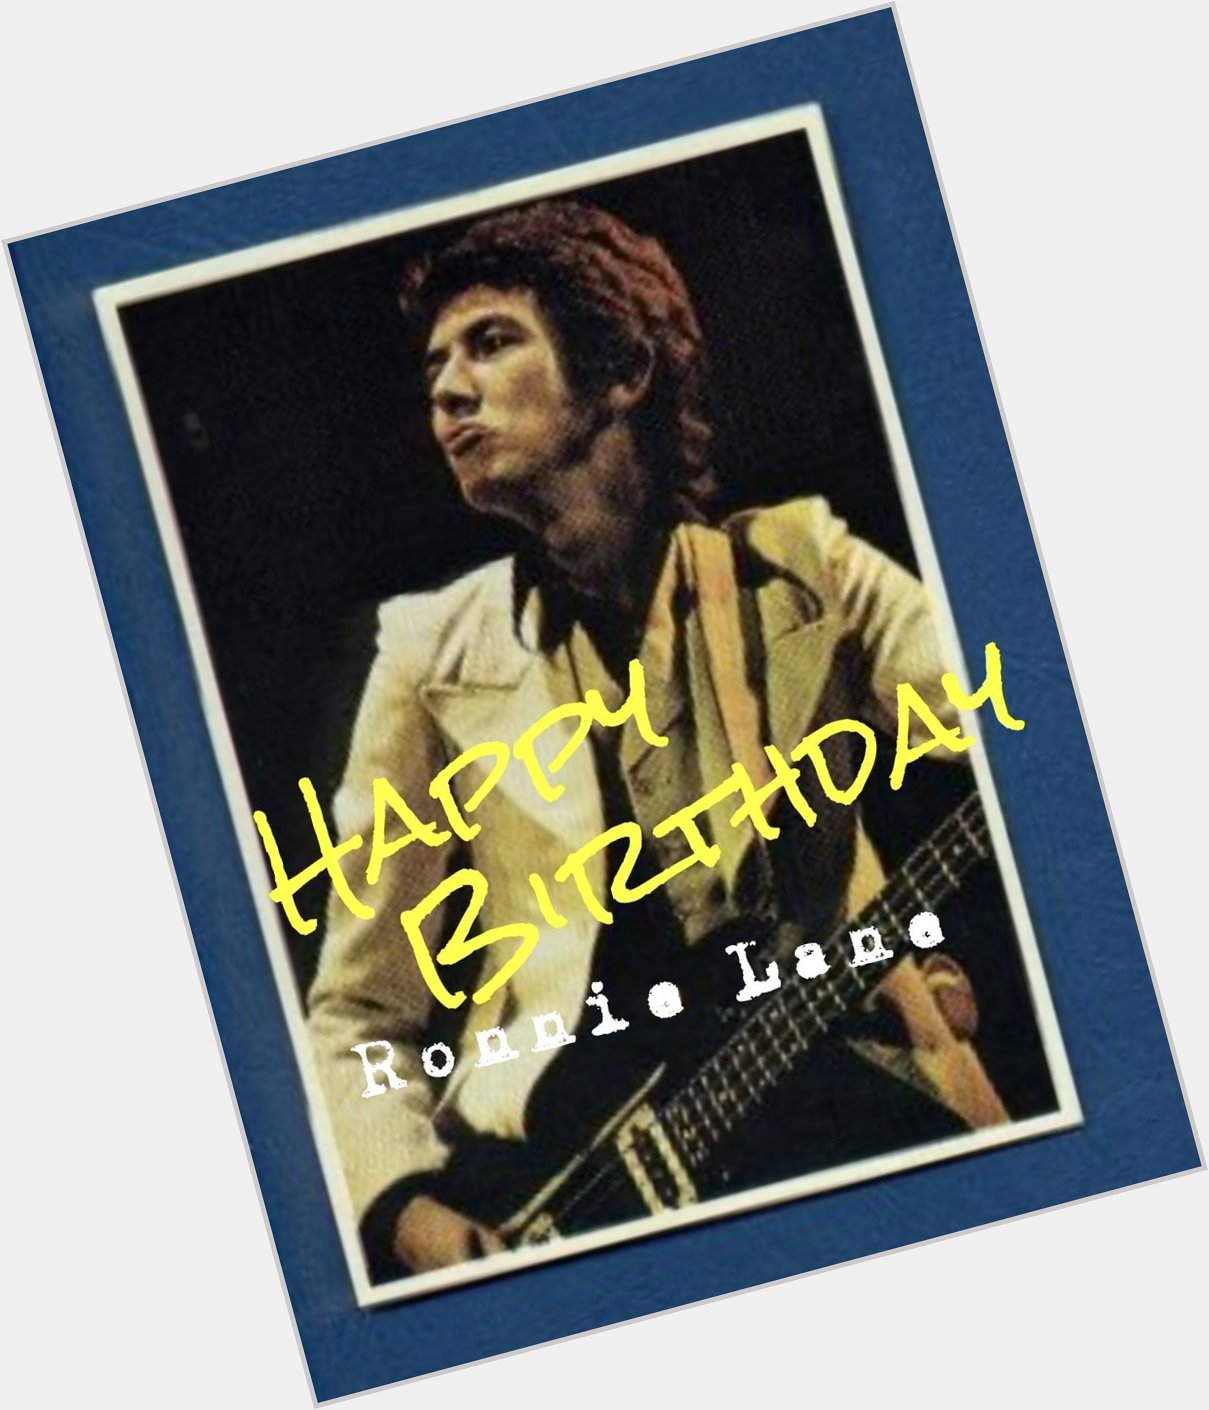 Happy Birthday
Ronnie Lane
1946-1997 